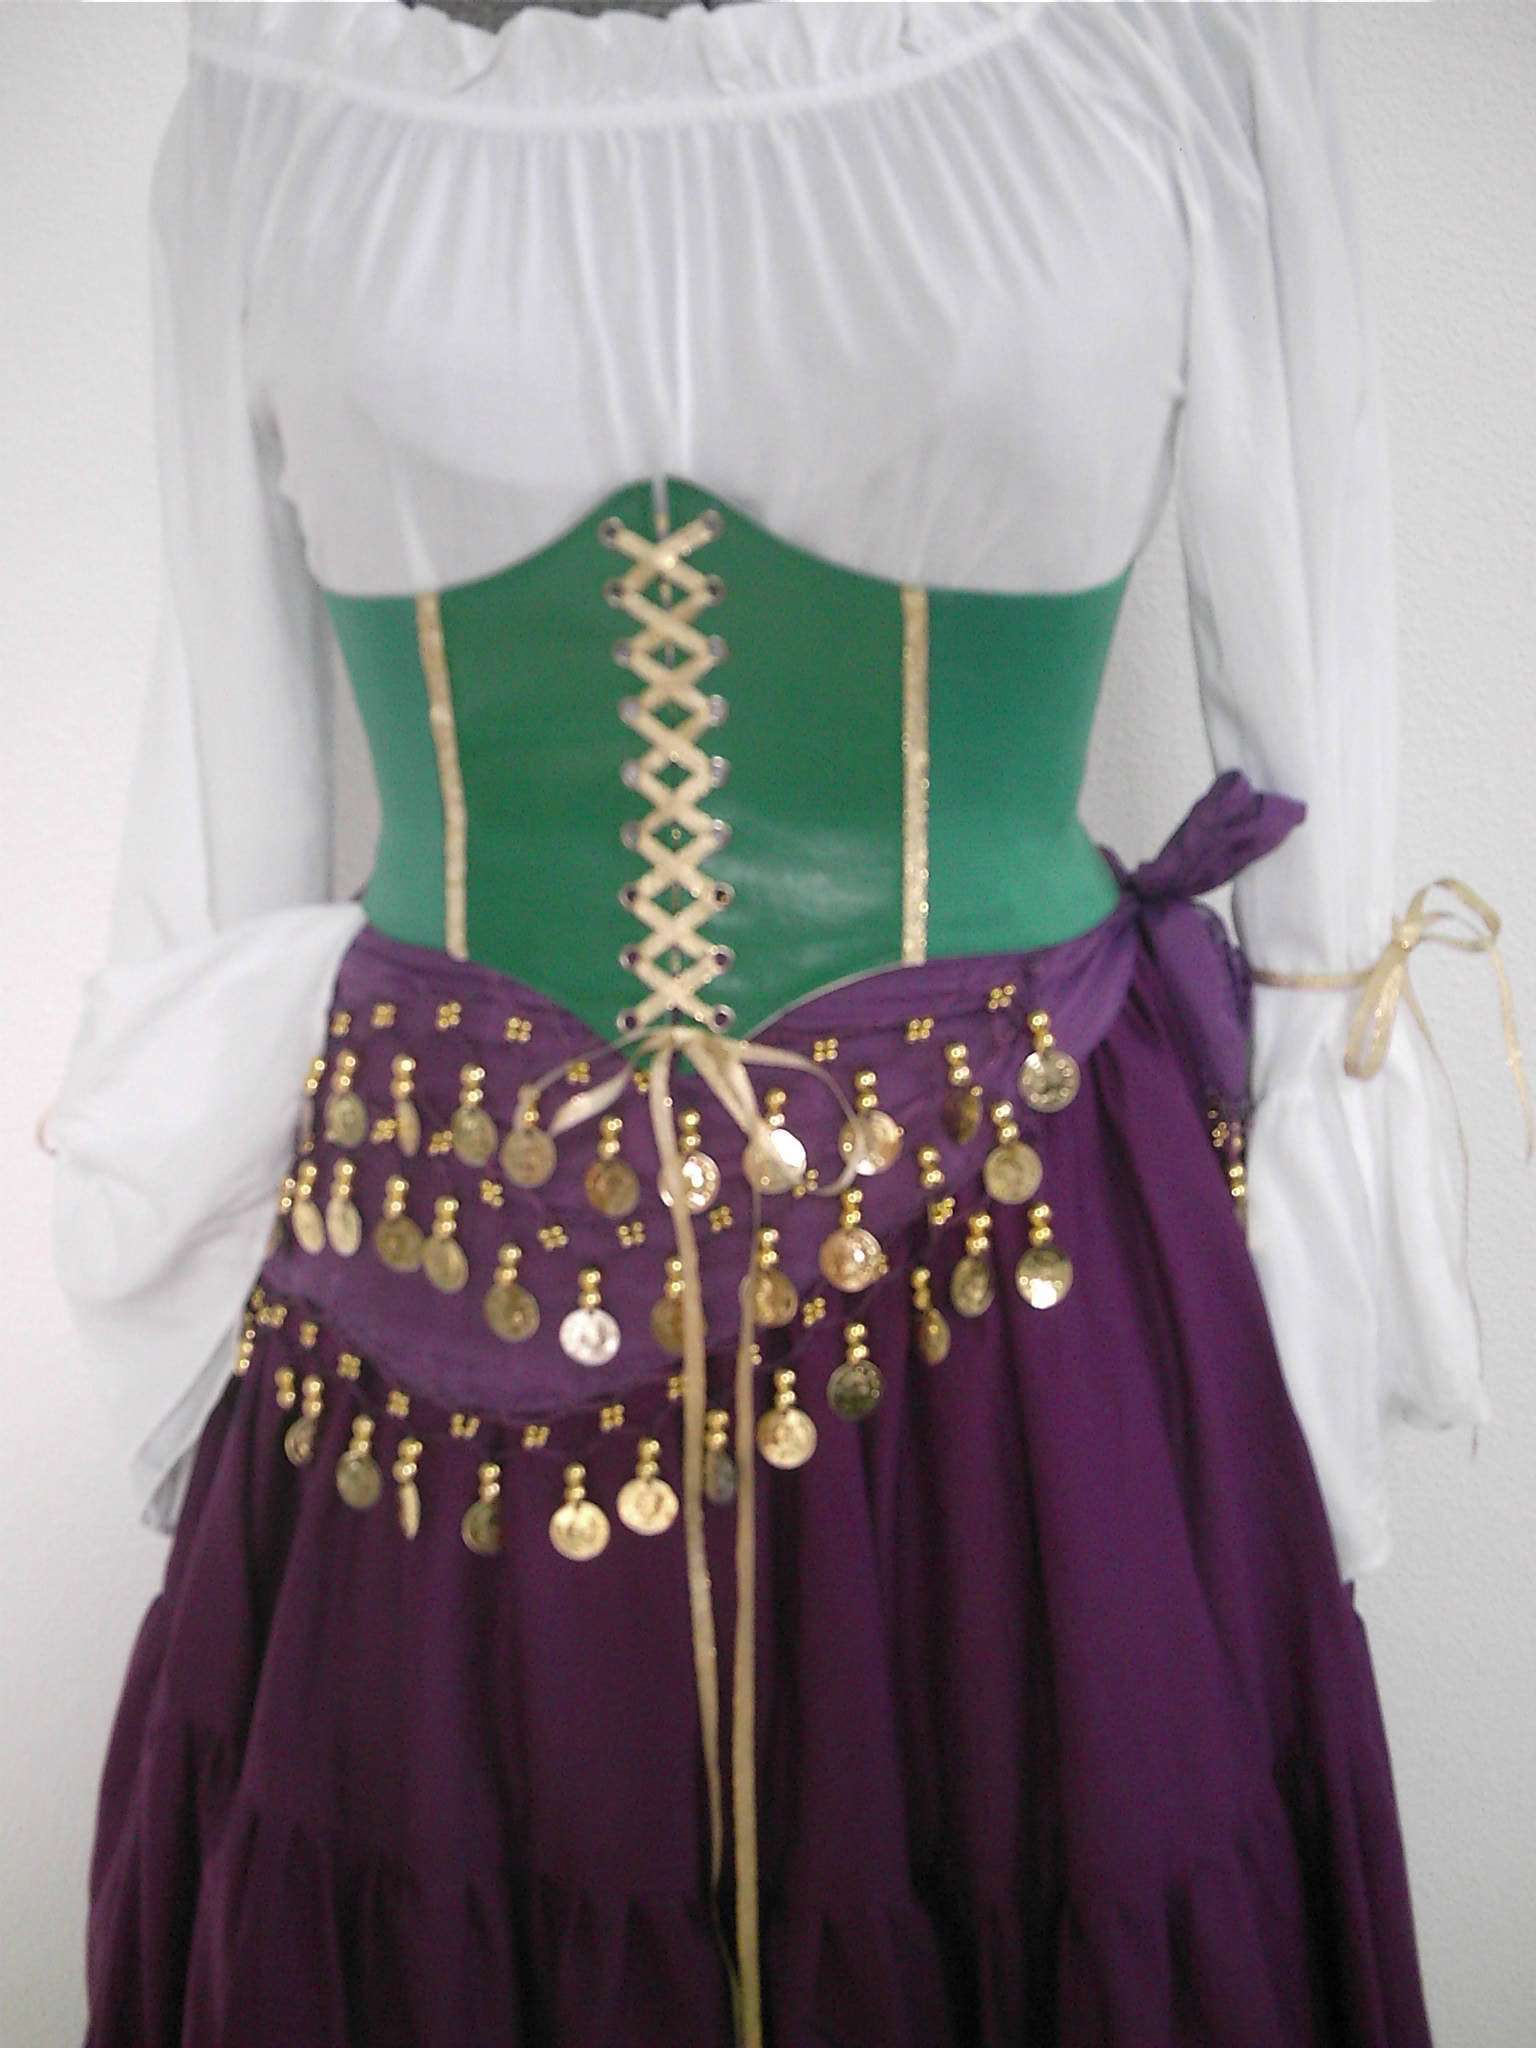 Esmeralda Costume Corset Belt 4 Pieces Hunchback of Notre Dame Inspired  Disney Costume Gypsy Cosplay Halloween 